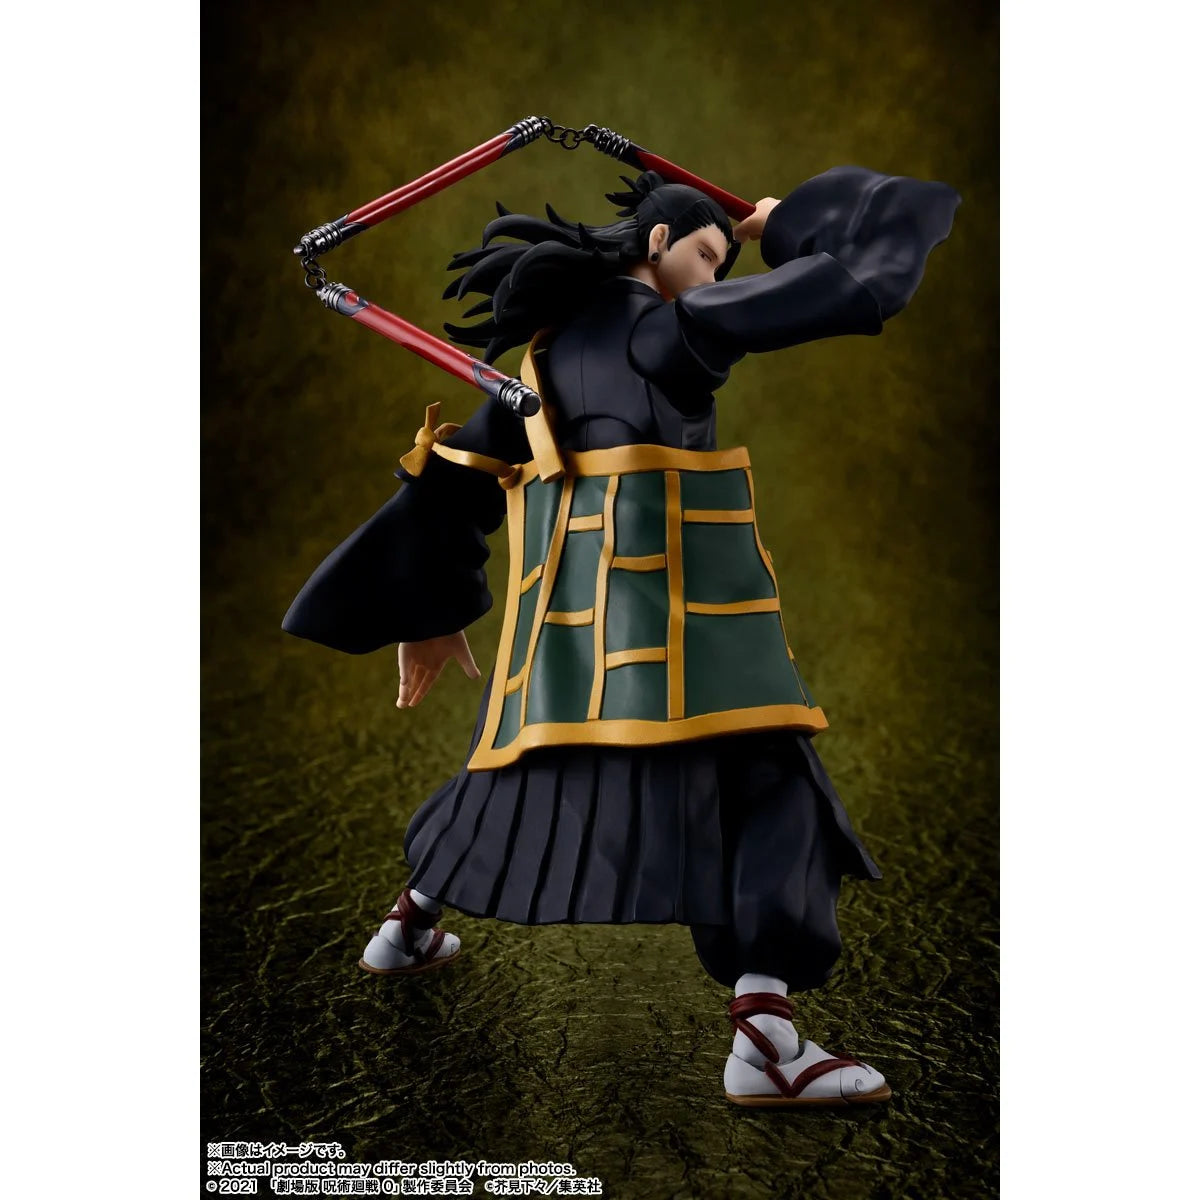 Jujutsu Kaisen 0 Suguru Geto Action Figure by S.H.Figuarts -Tamashii Nations - India - www.superherotoystore.com